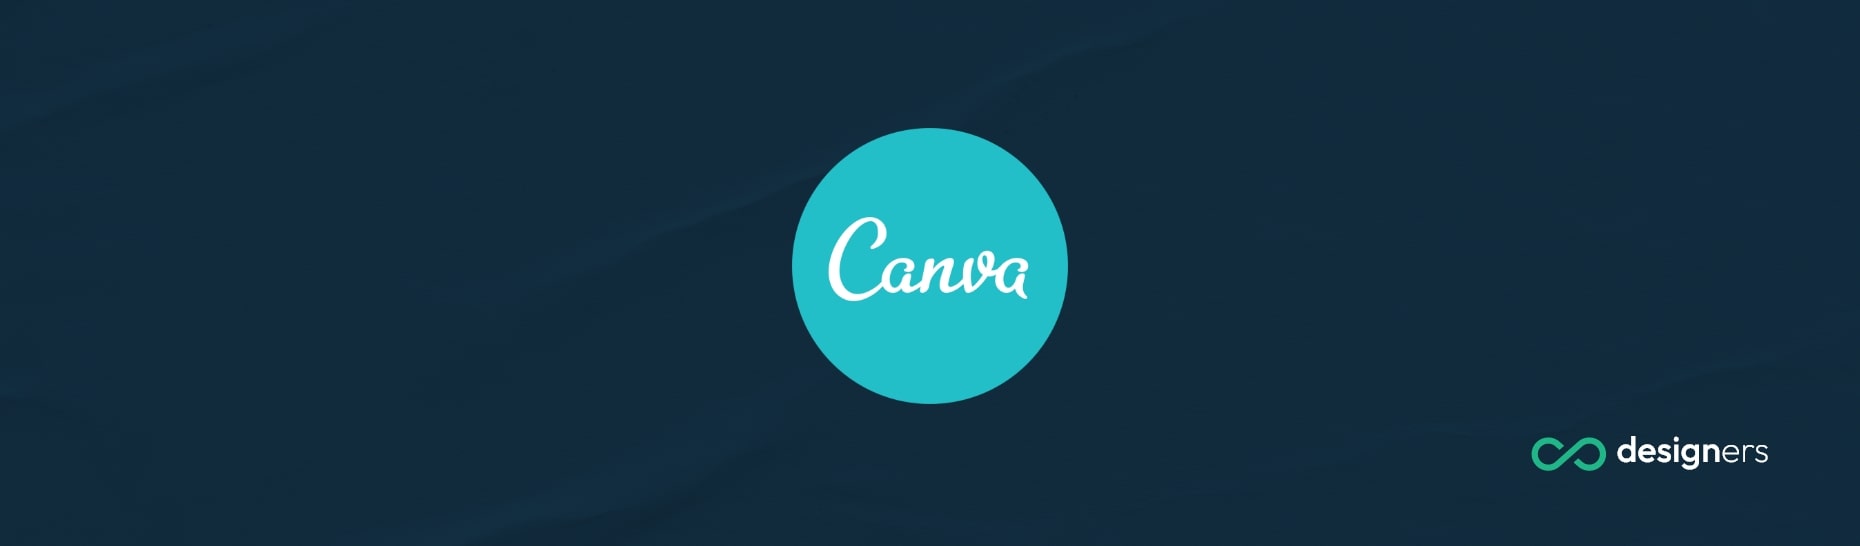 How Do You Make a Trifold Brochure on Canva?